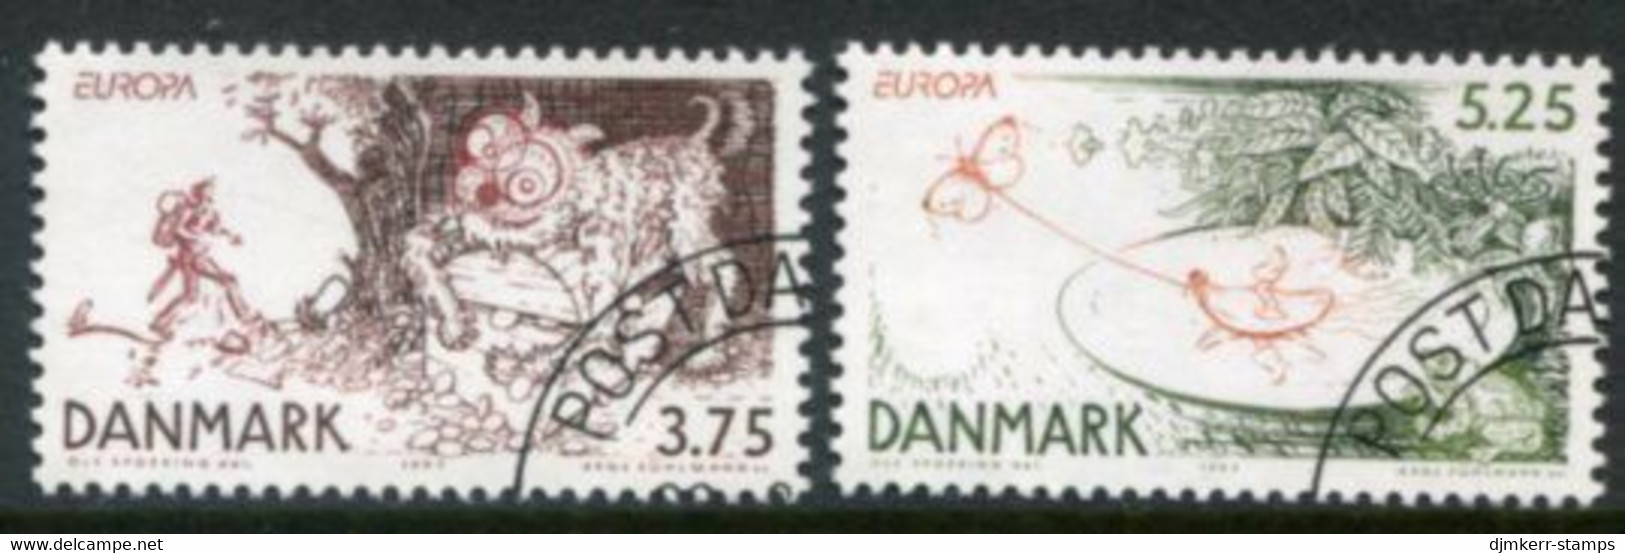 DENMARK 1997 Europa: Sagas And Legends Used.  Michel 1162-63 - Gebraucht